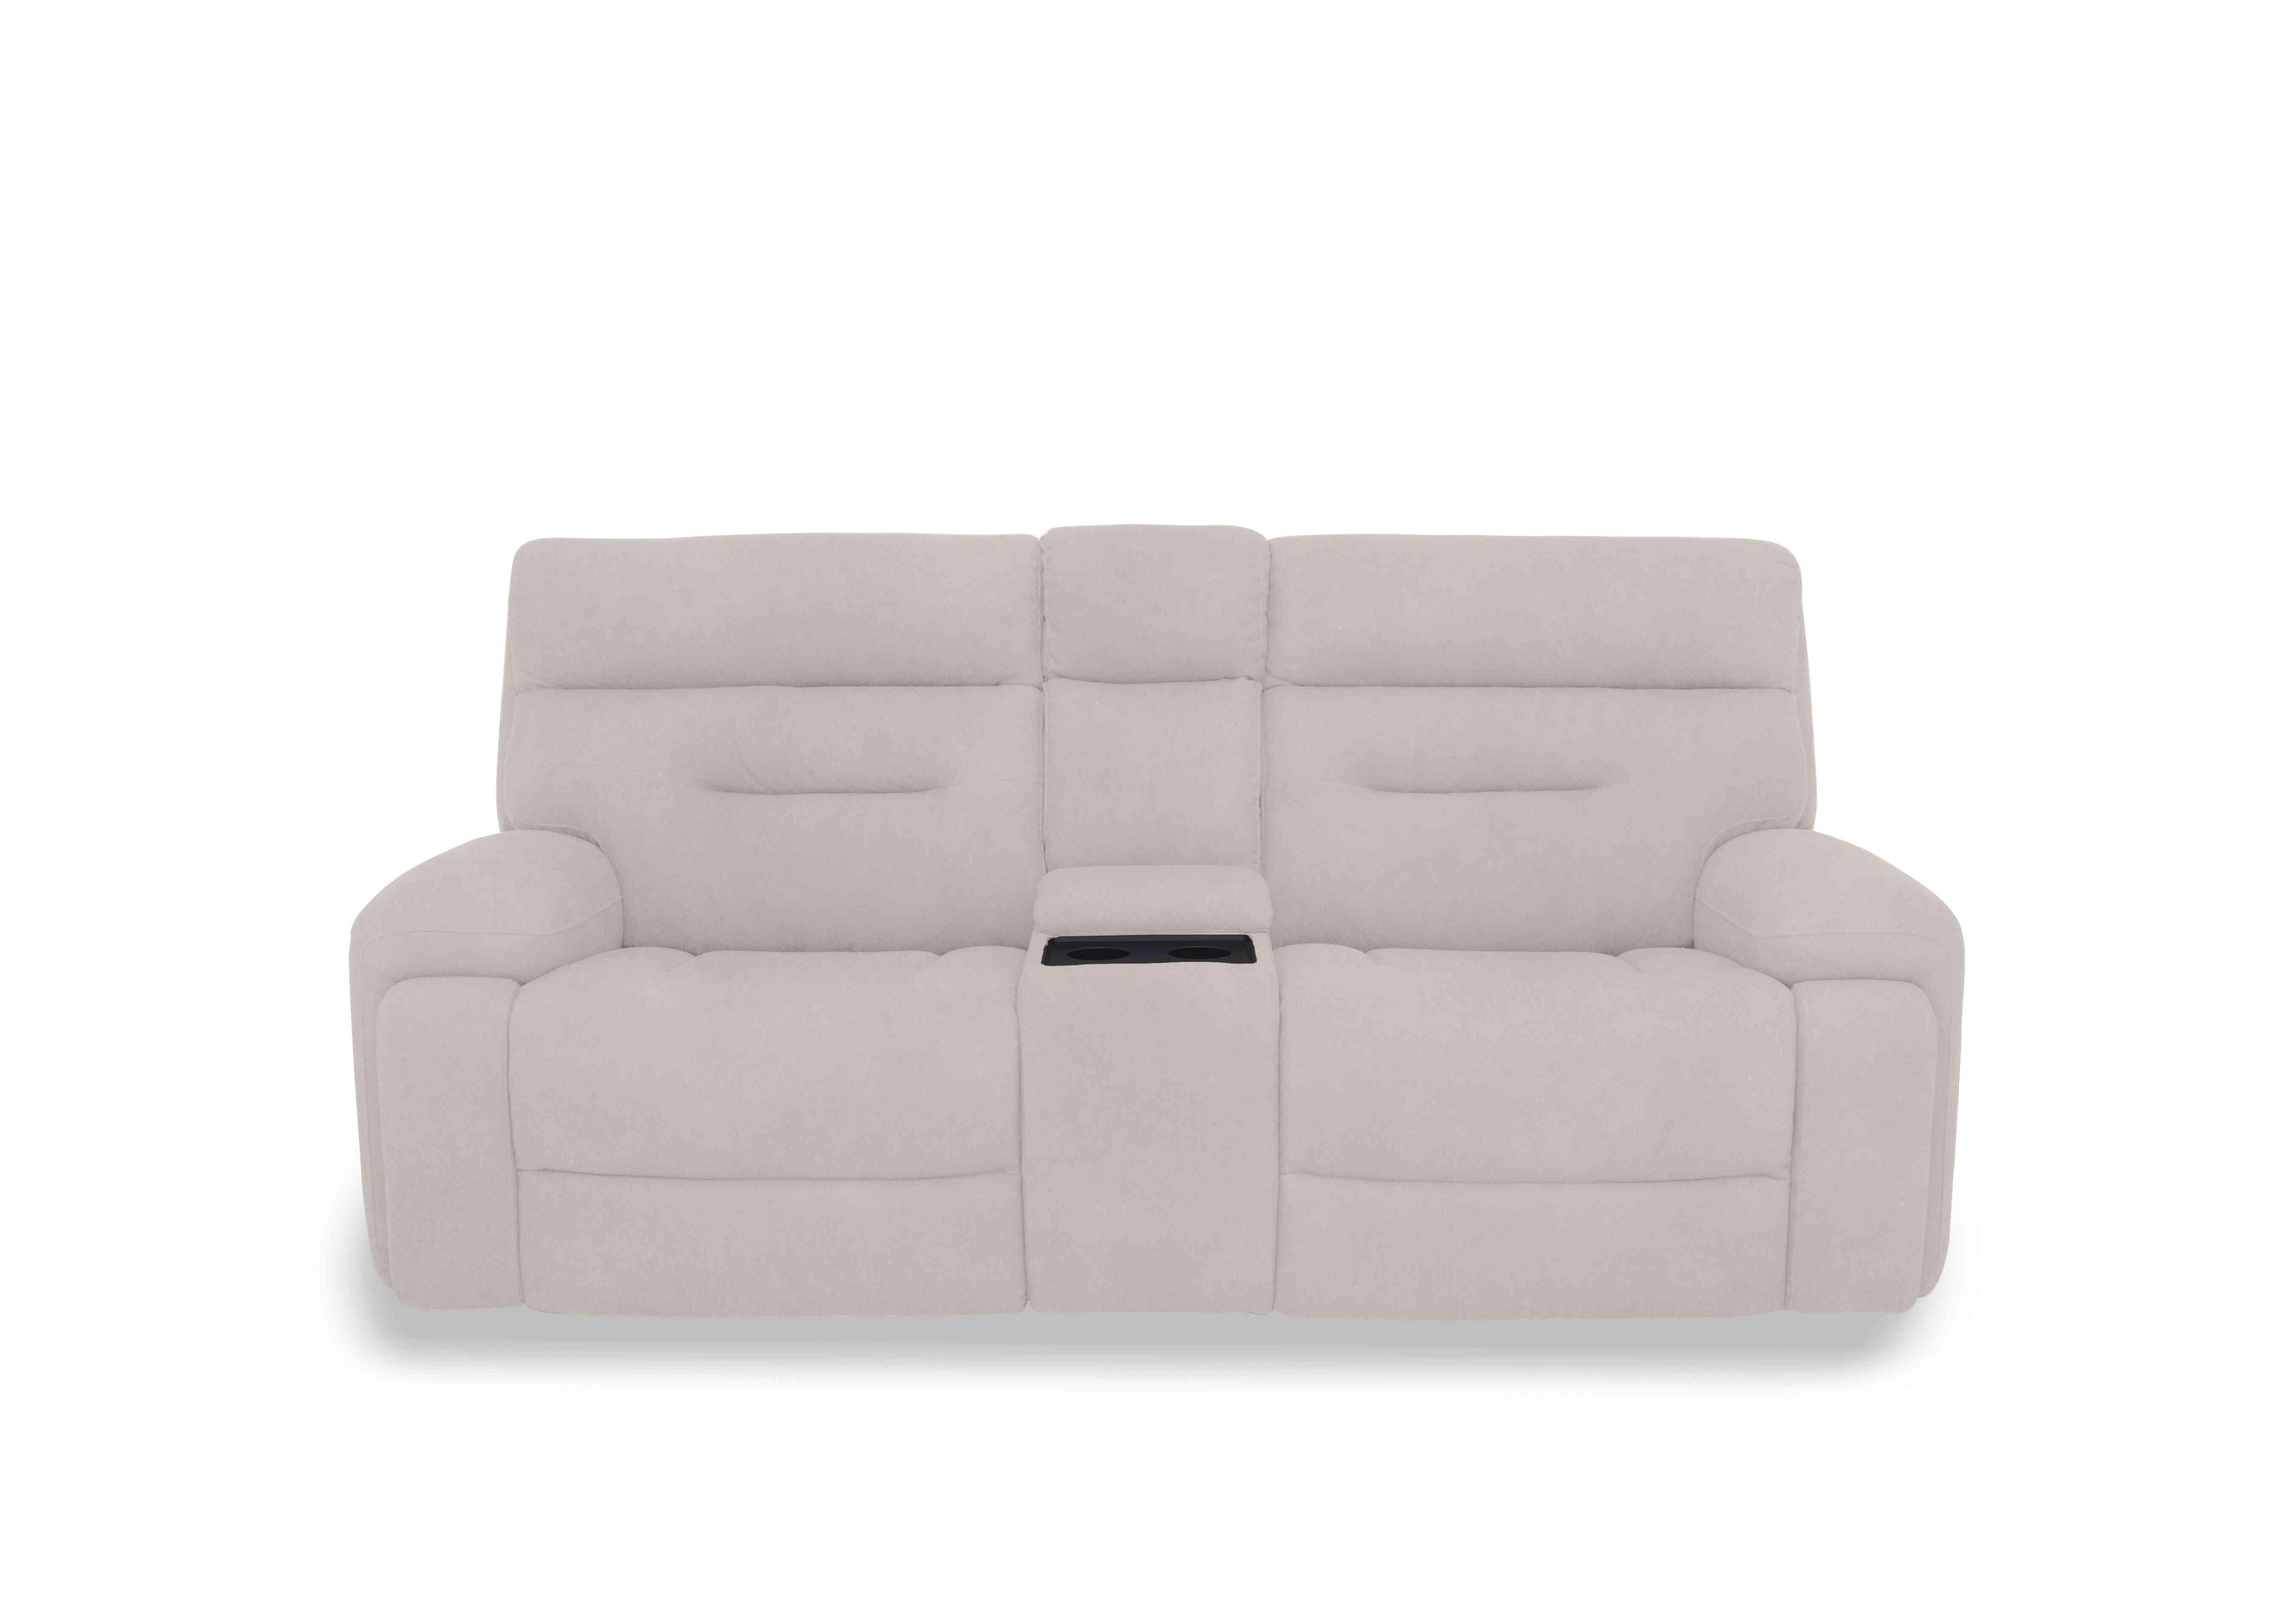 Cinemax Media 3 Seater Fabric Power Recliner Sofa with Power Headrests in Vv-0307 Velvet White on Furniture Village